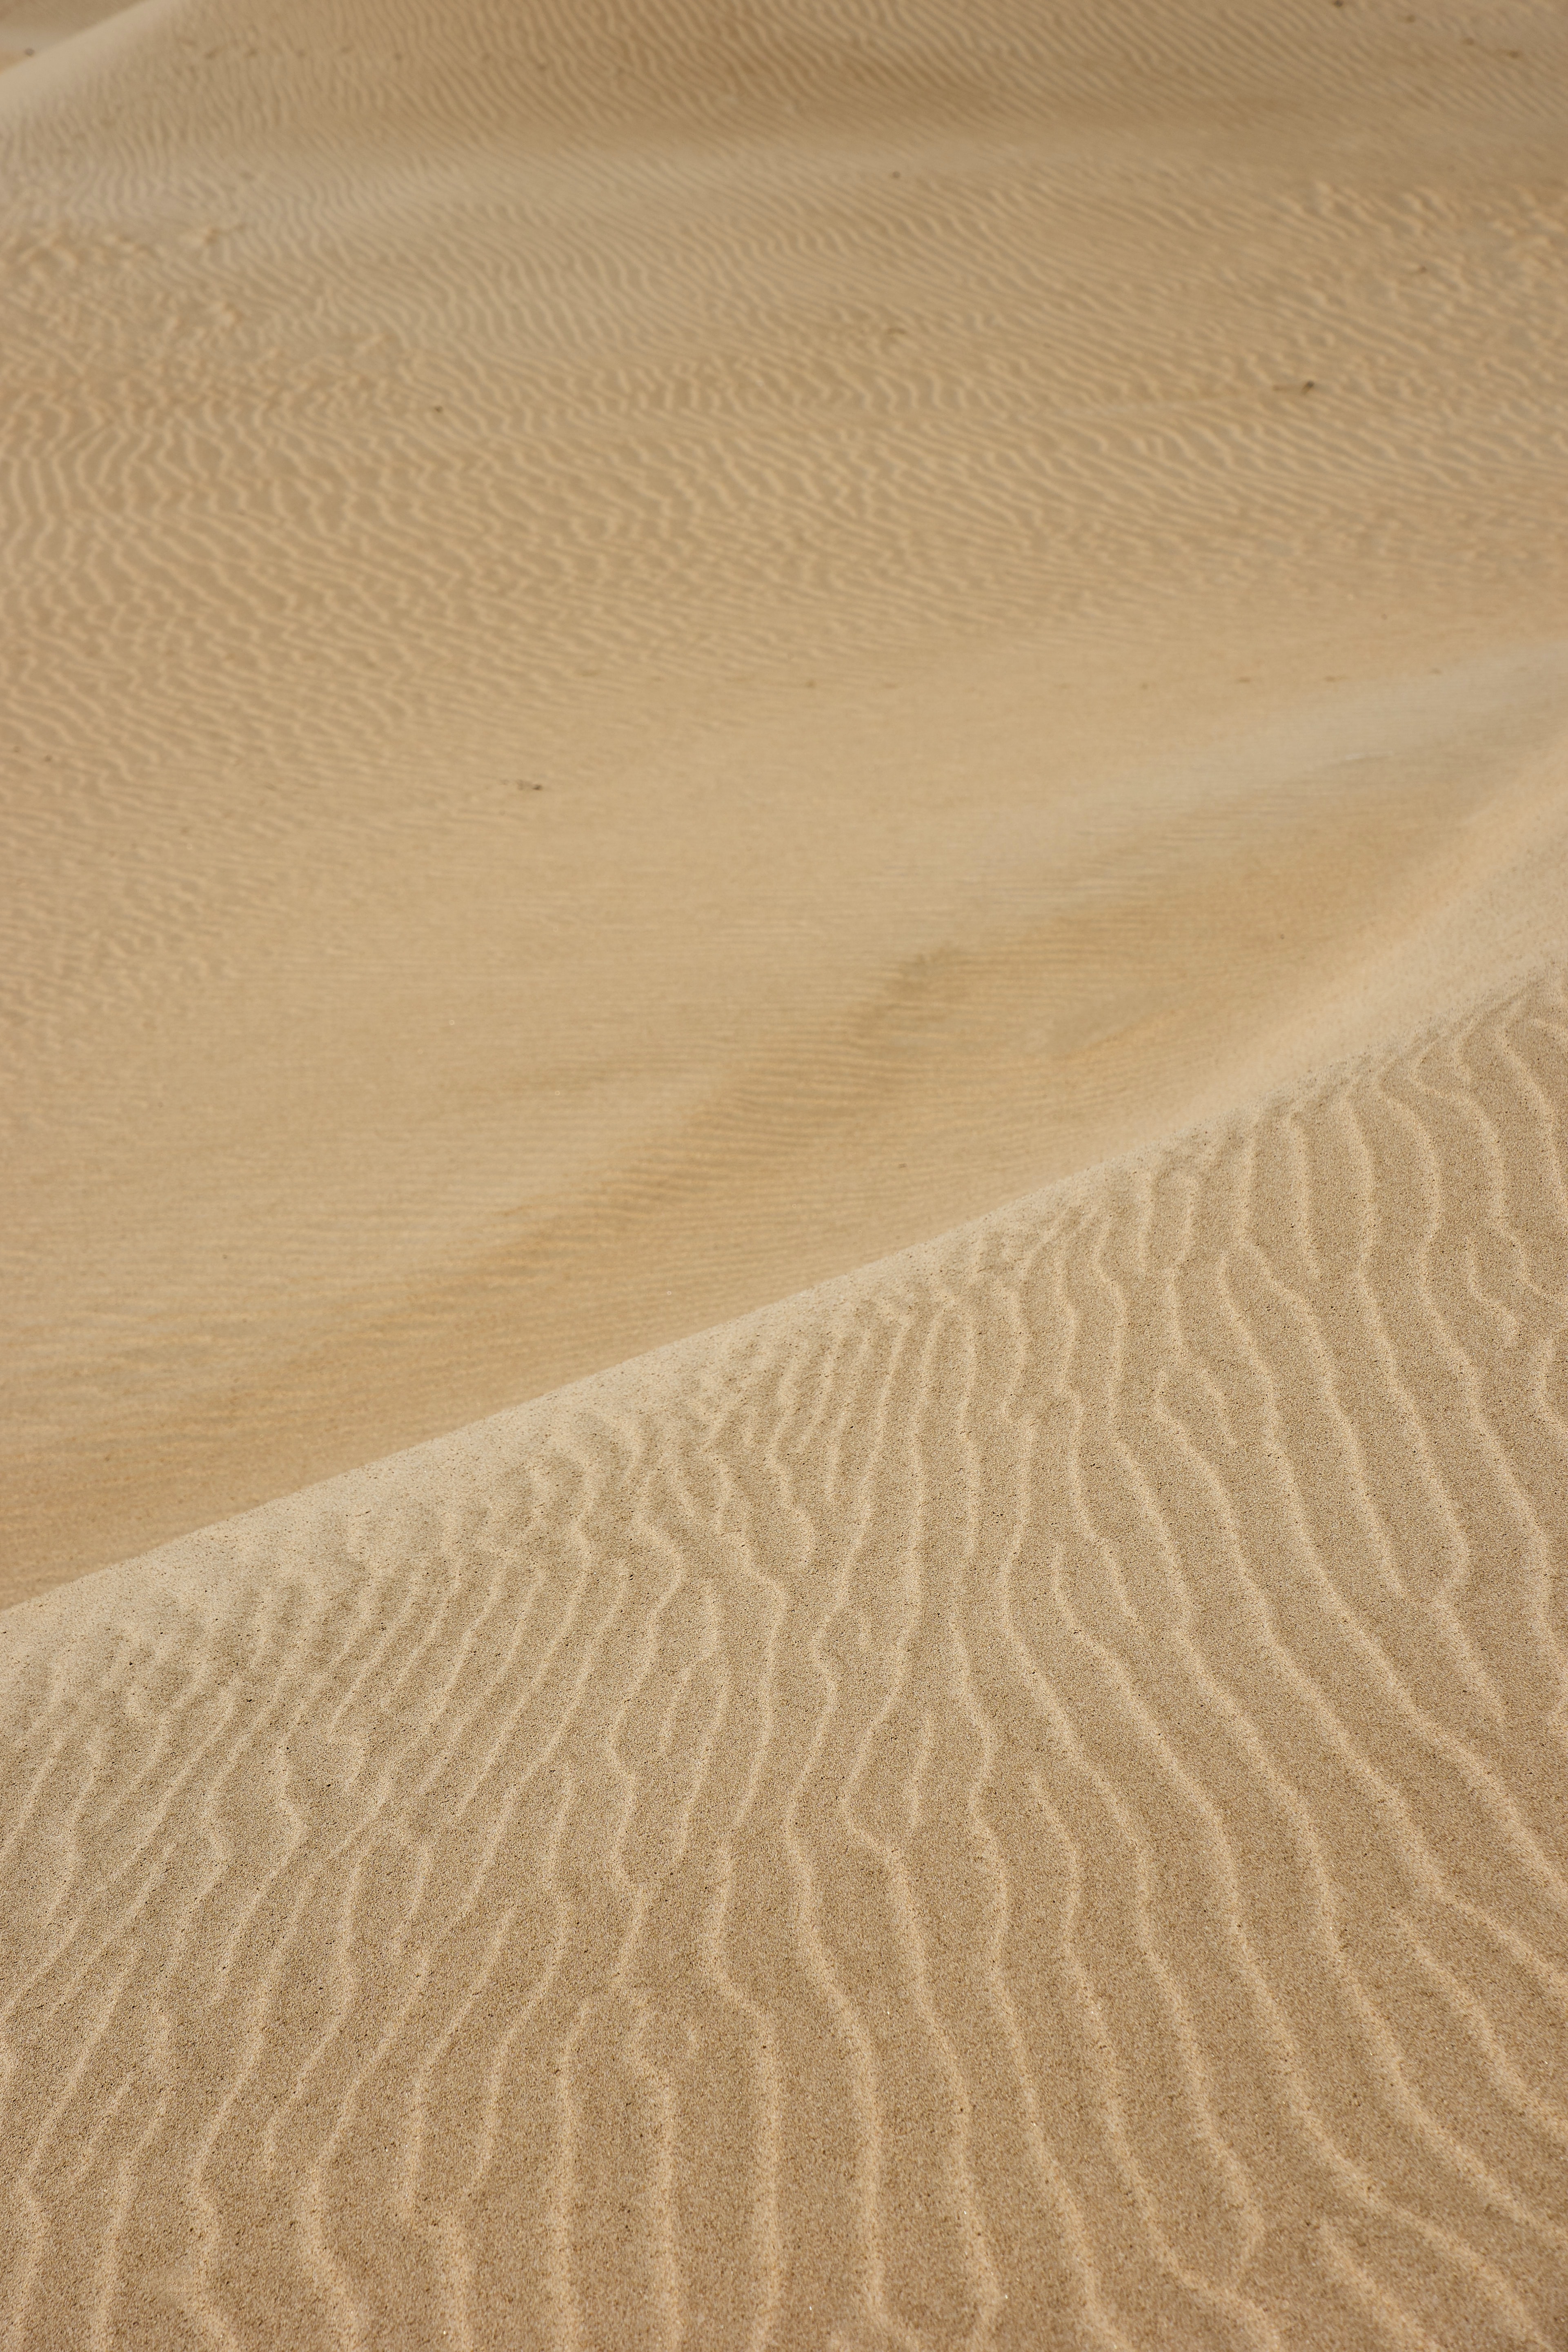 nature, waves, sand, desert, traces, dunes